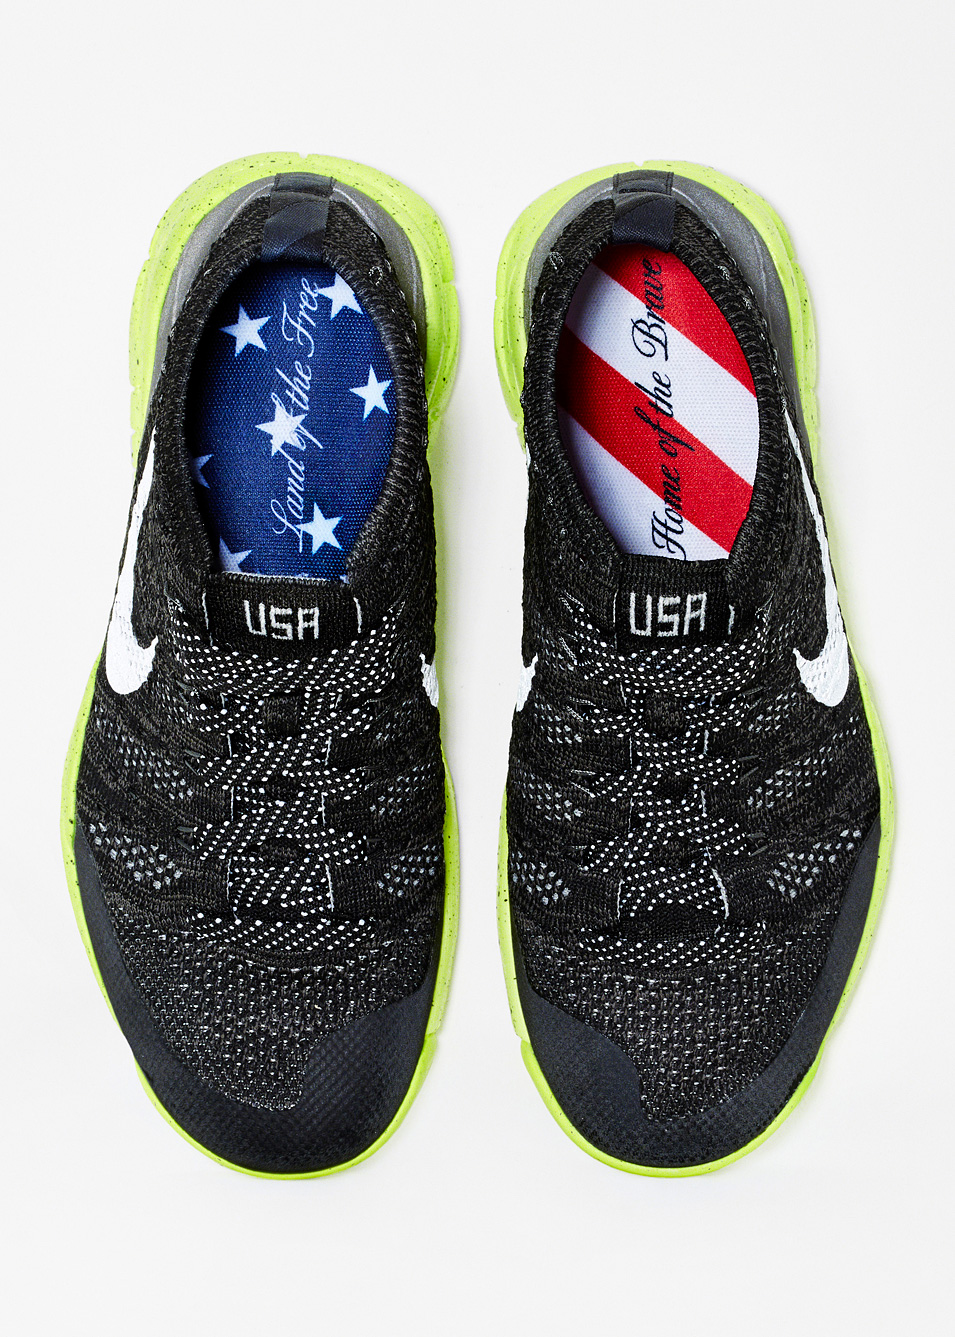 Nike-Team-USA-Winter-Collection-06